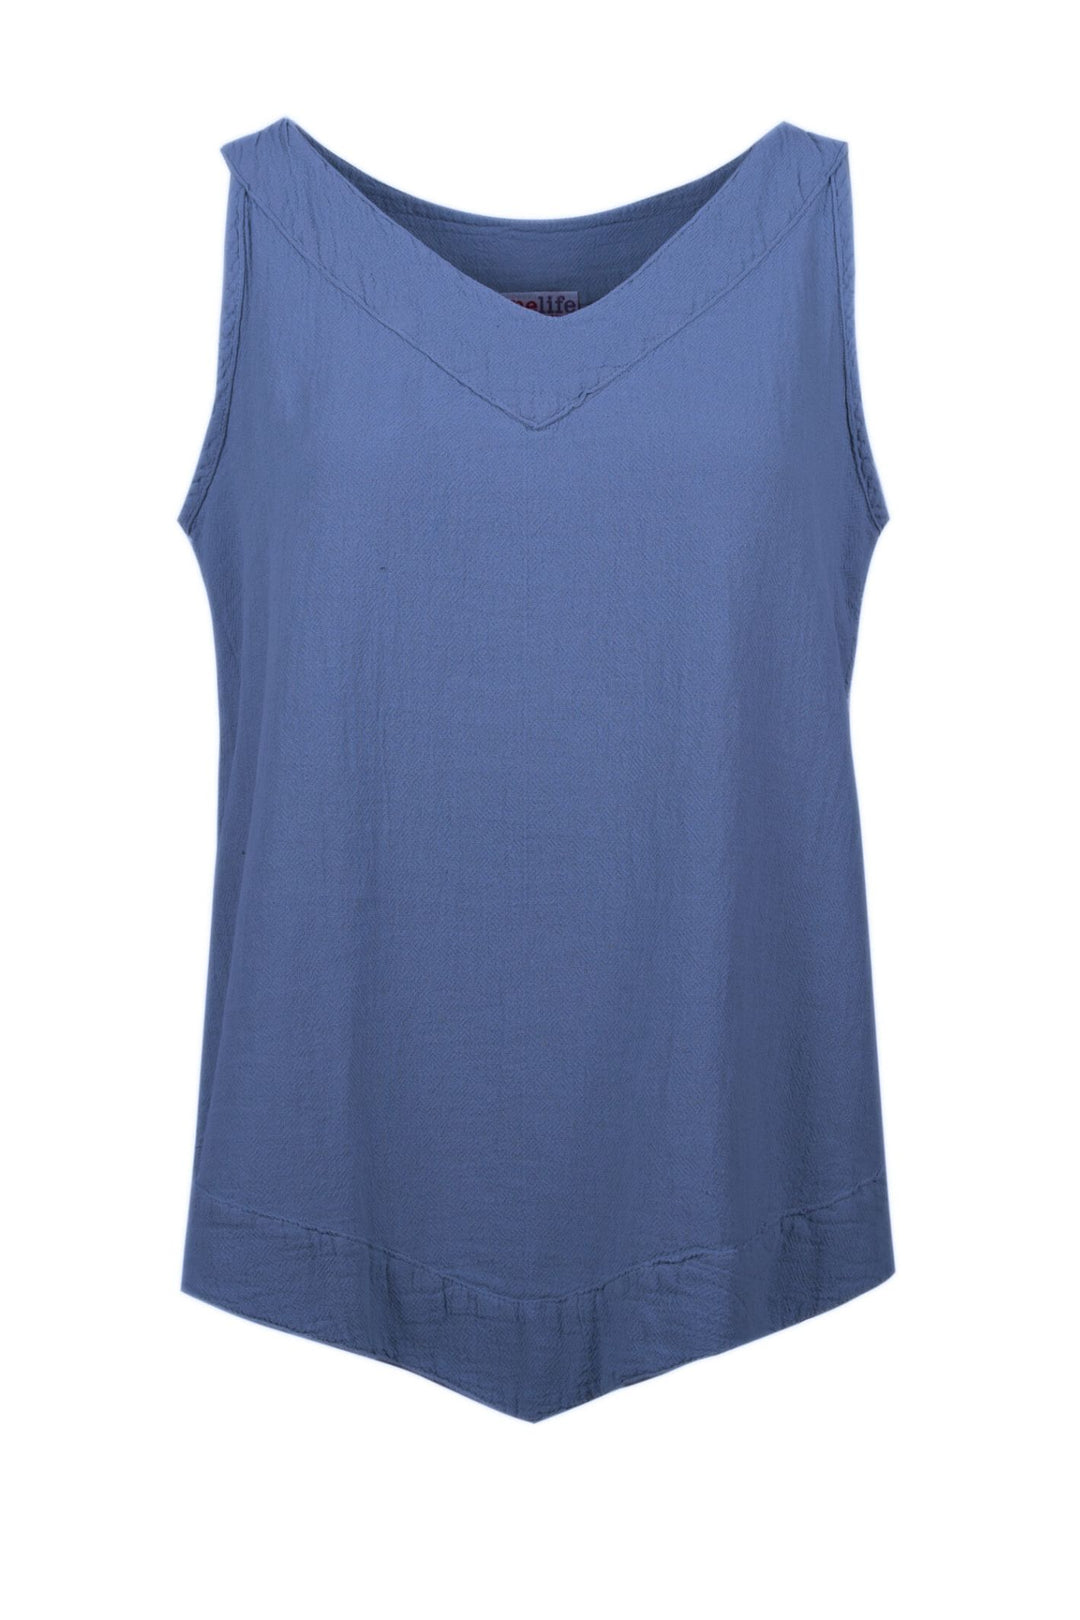 Onelife T292 Julia Neptune Blue Cotton Vest Top